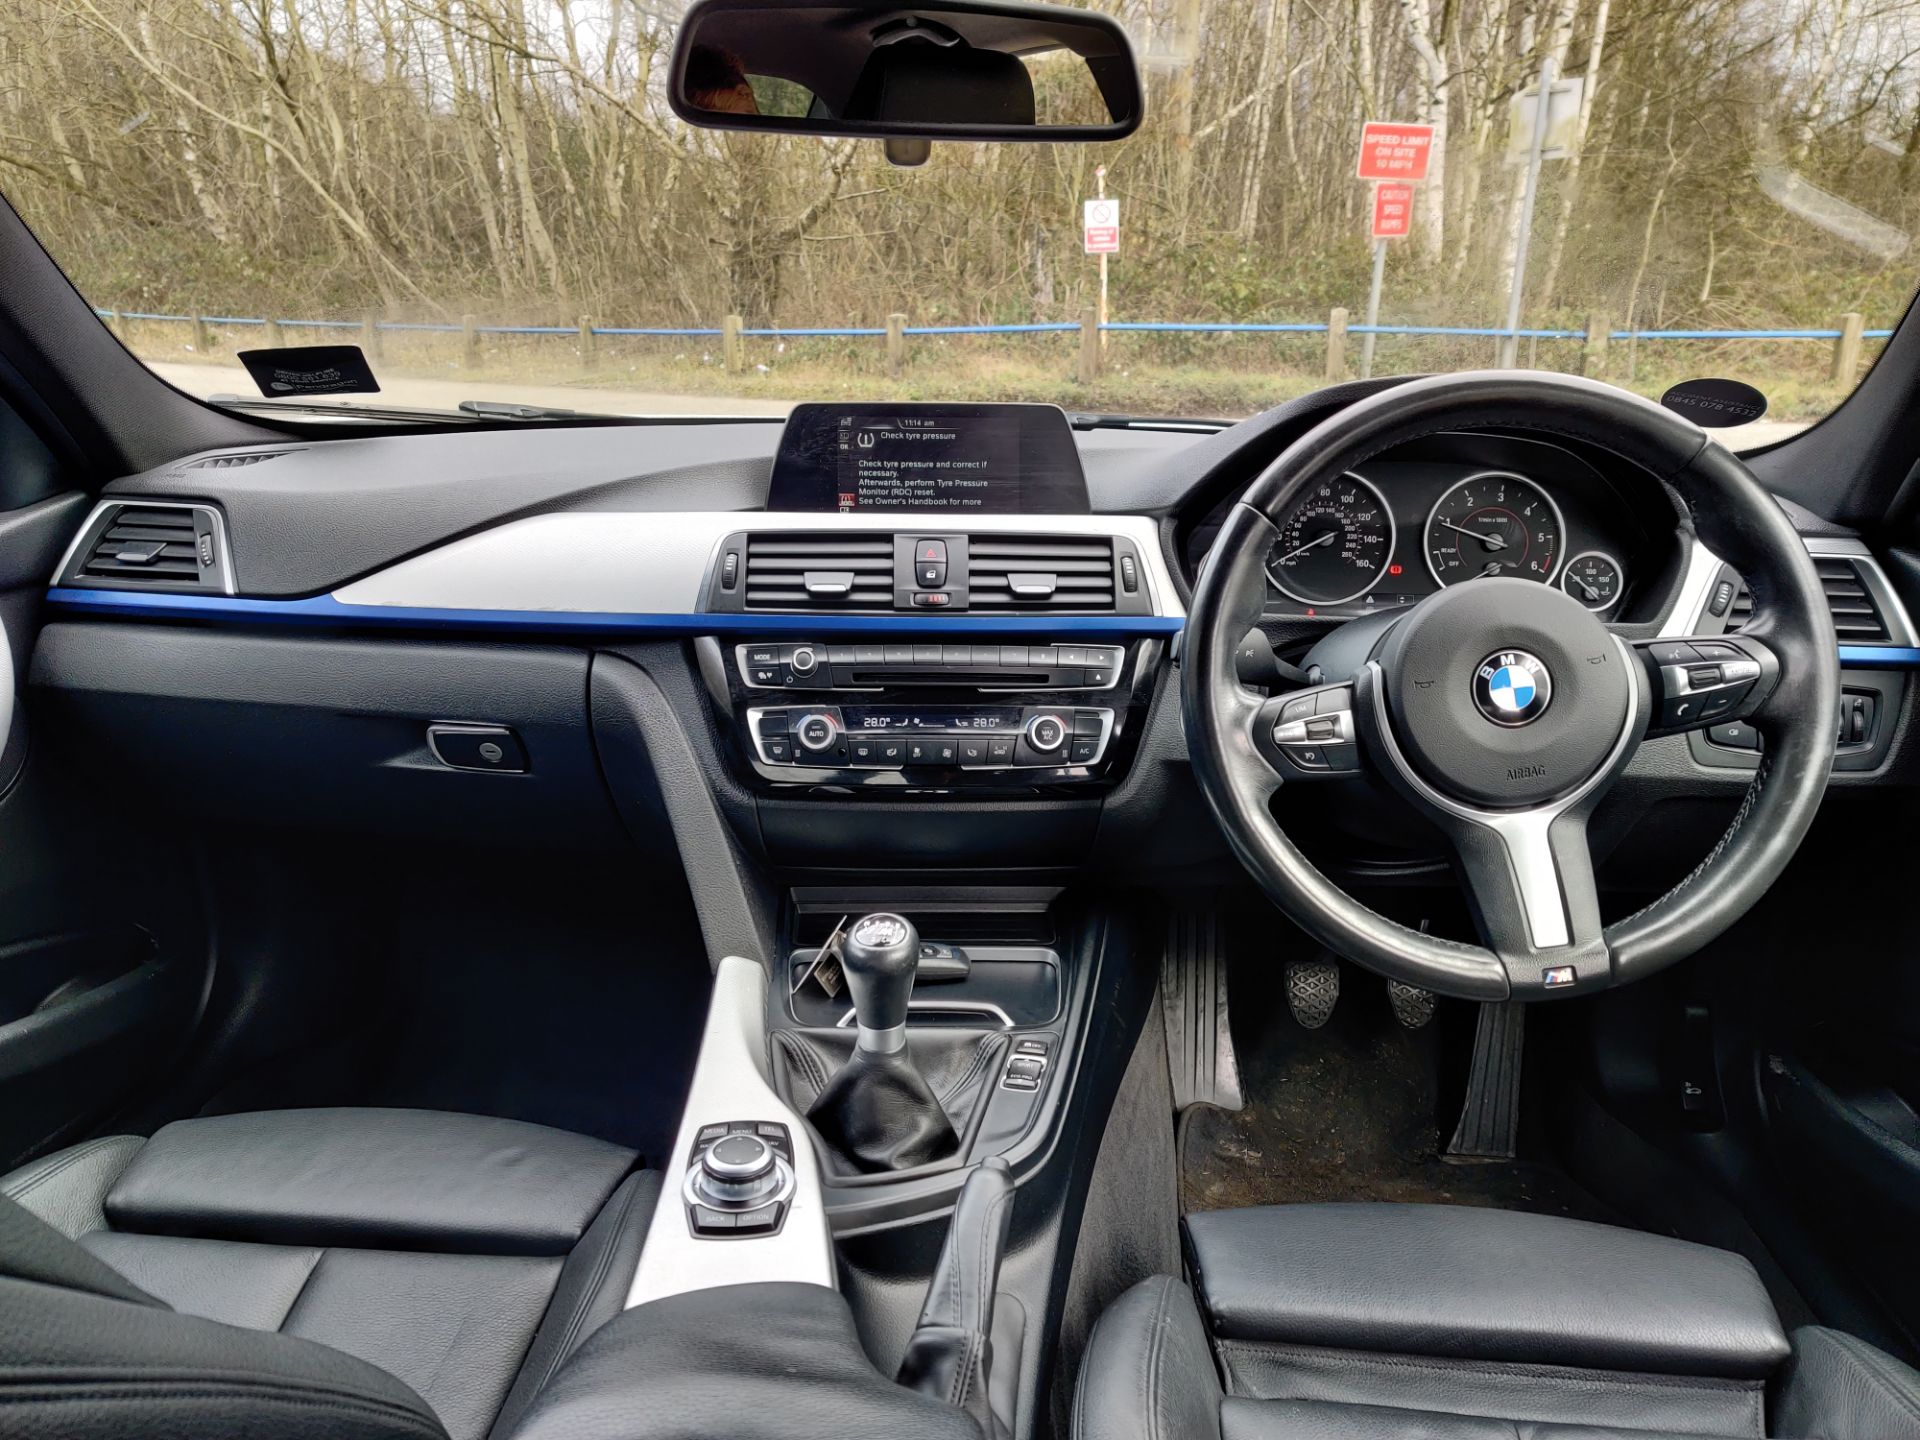 2015/65 REG BMW 318D M SPORT 2.0 DIESEL WHITE 4 DOOR SALOON, SHOWING 0 FORMER KEEPERS *NO VAT* - Image 13 of 23